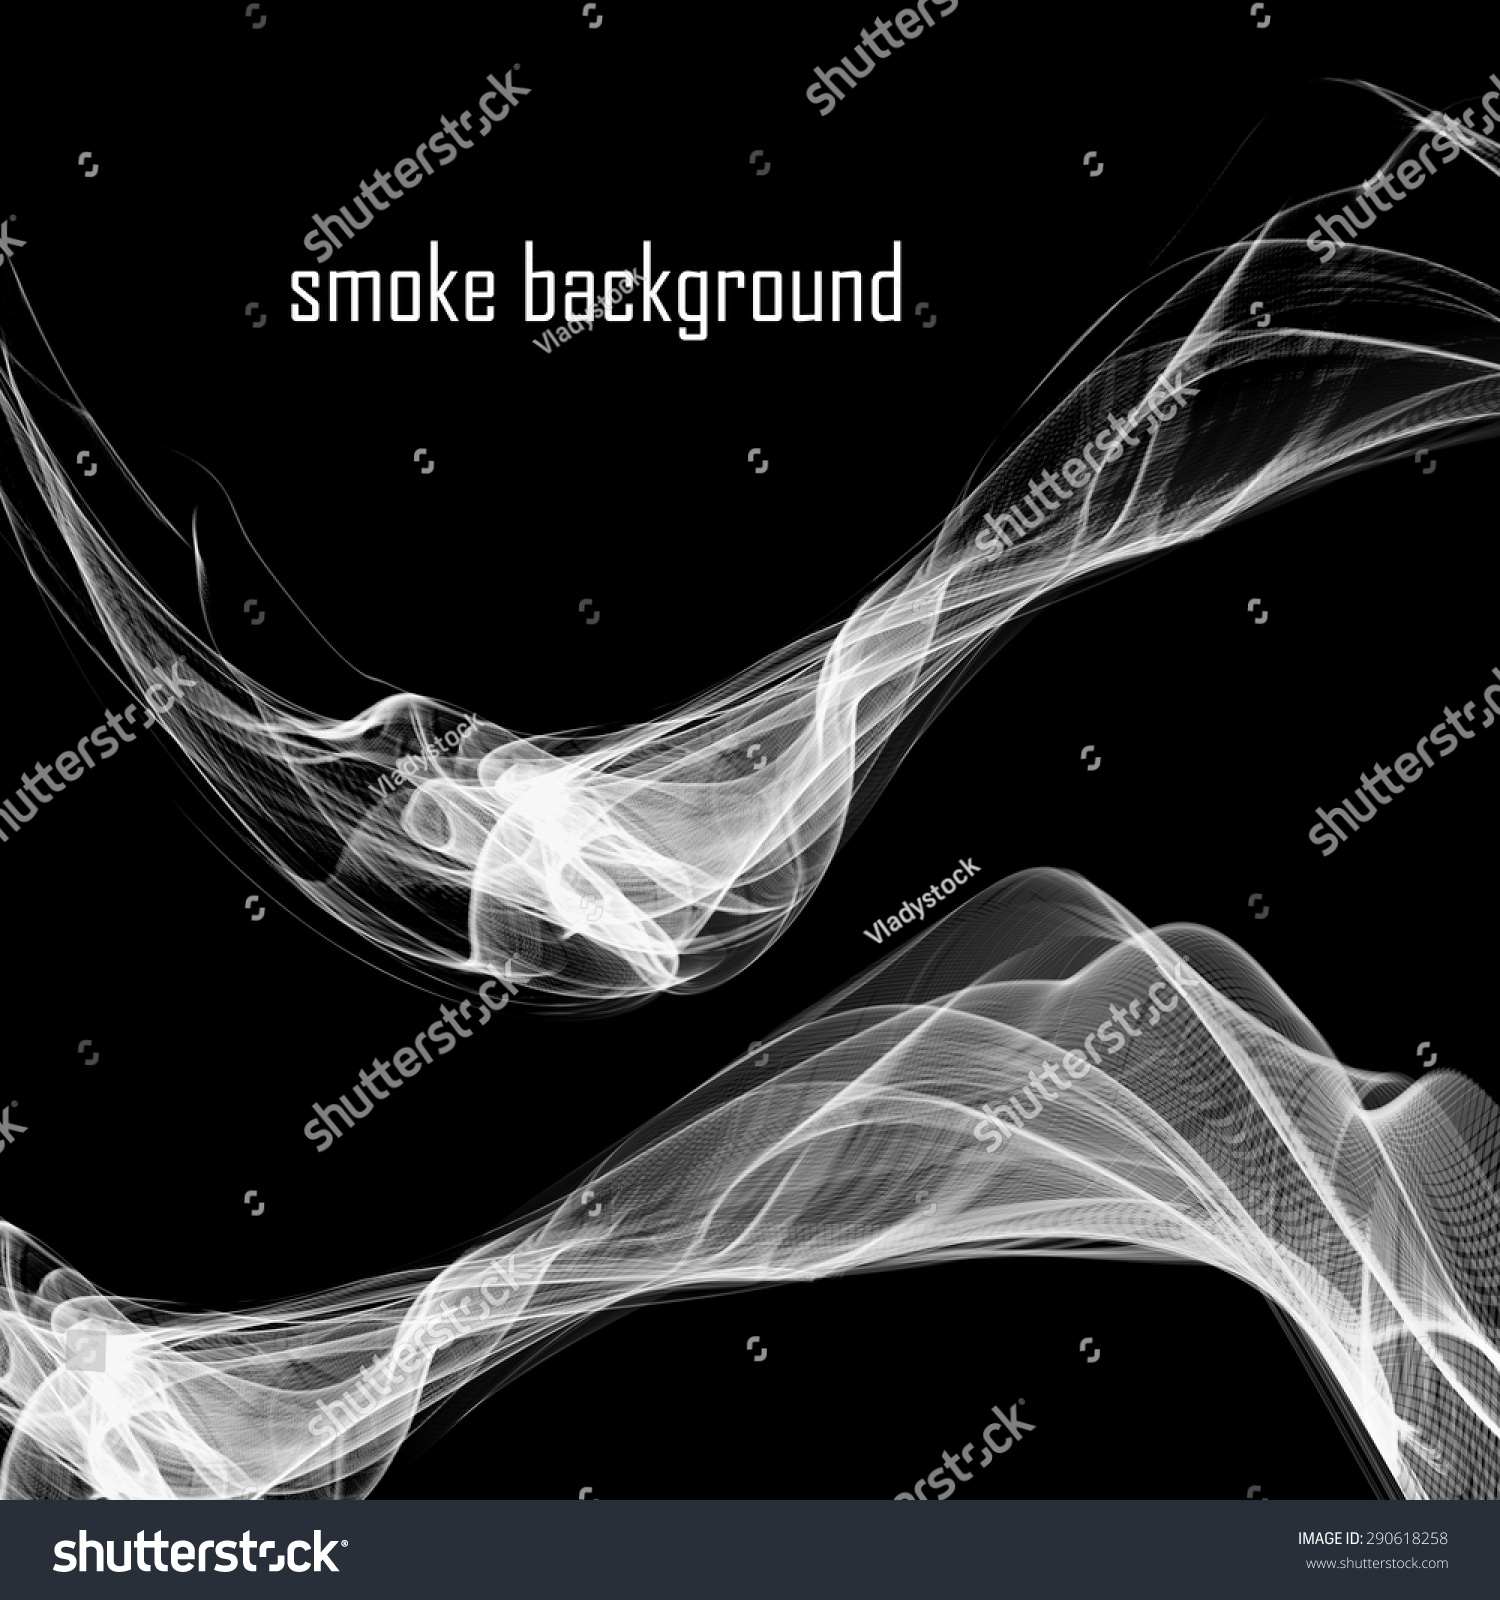 Edit Vectors Free Online - Abstract smoke | Shutterstock Editor